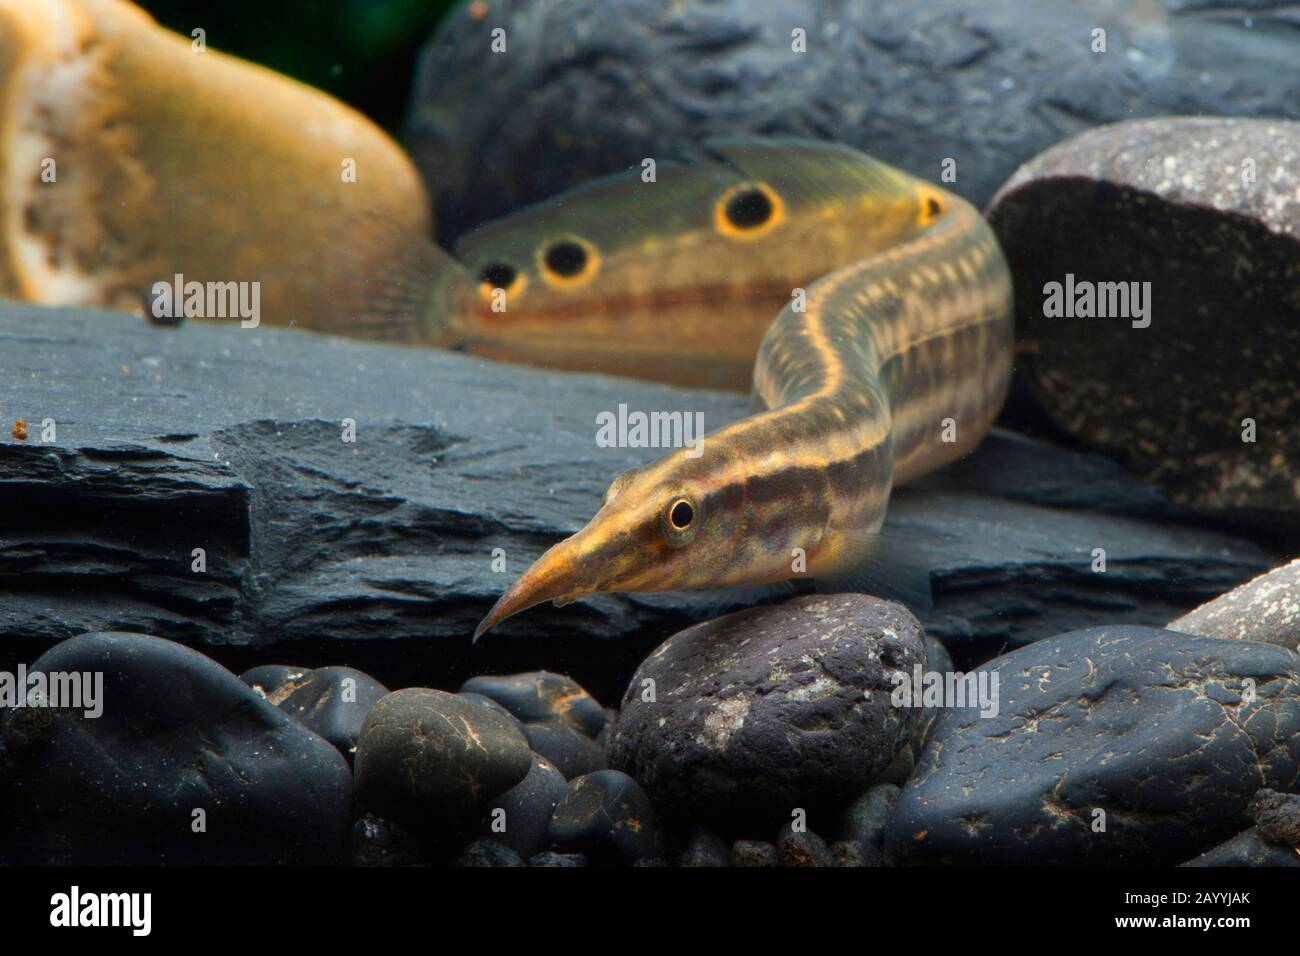 Peacock eel (Macrognathus siamensis), on stones in water Stock Photo